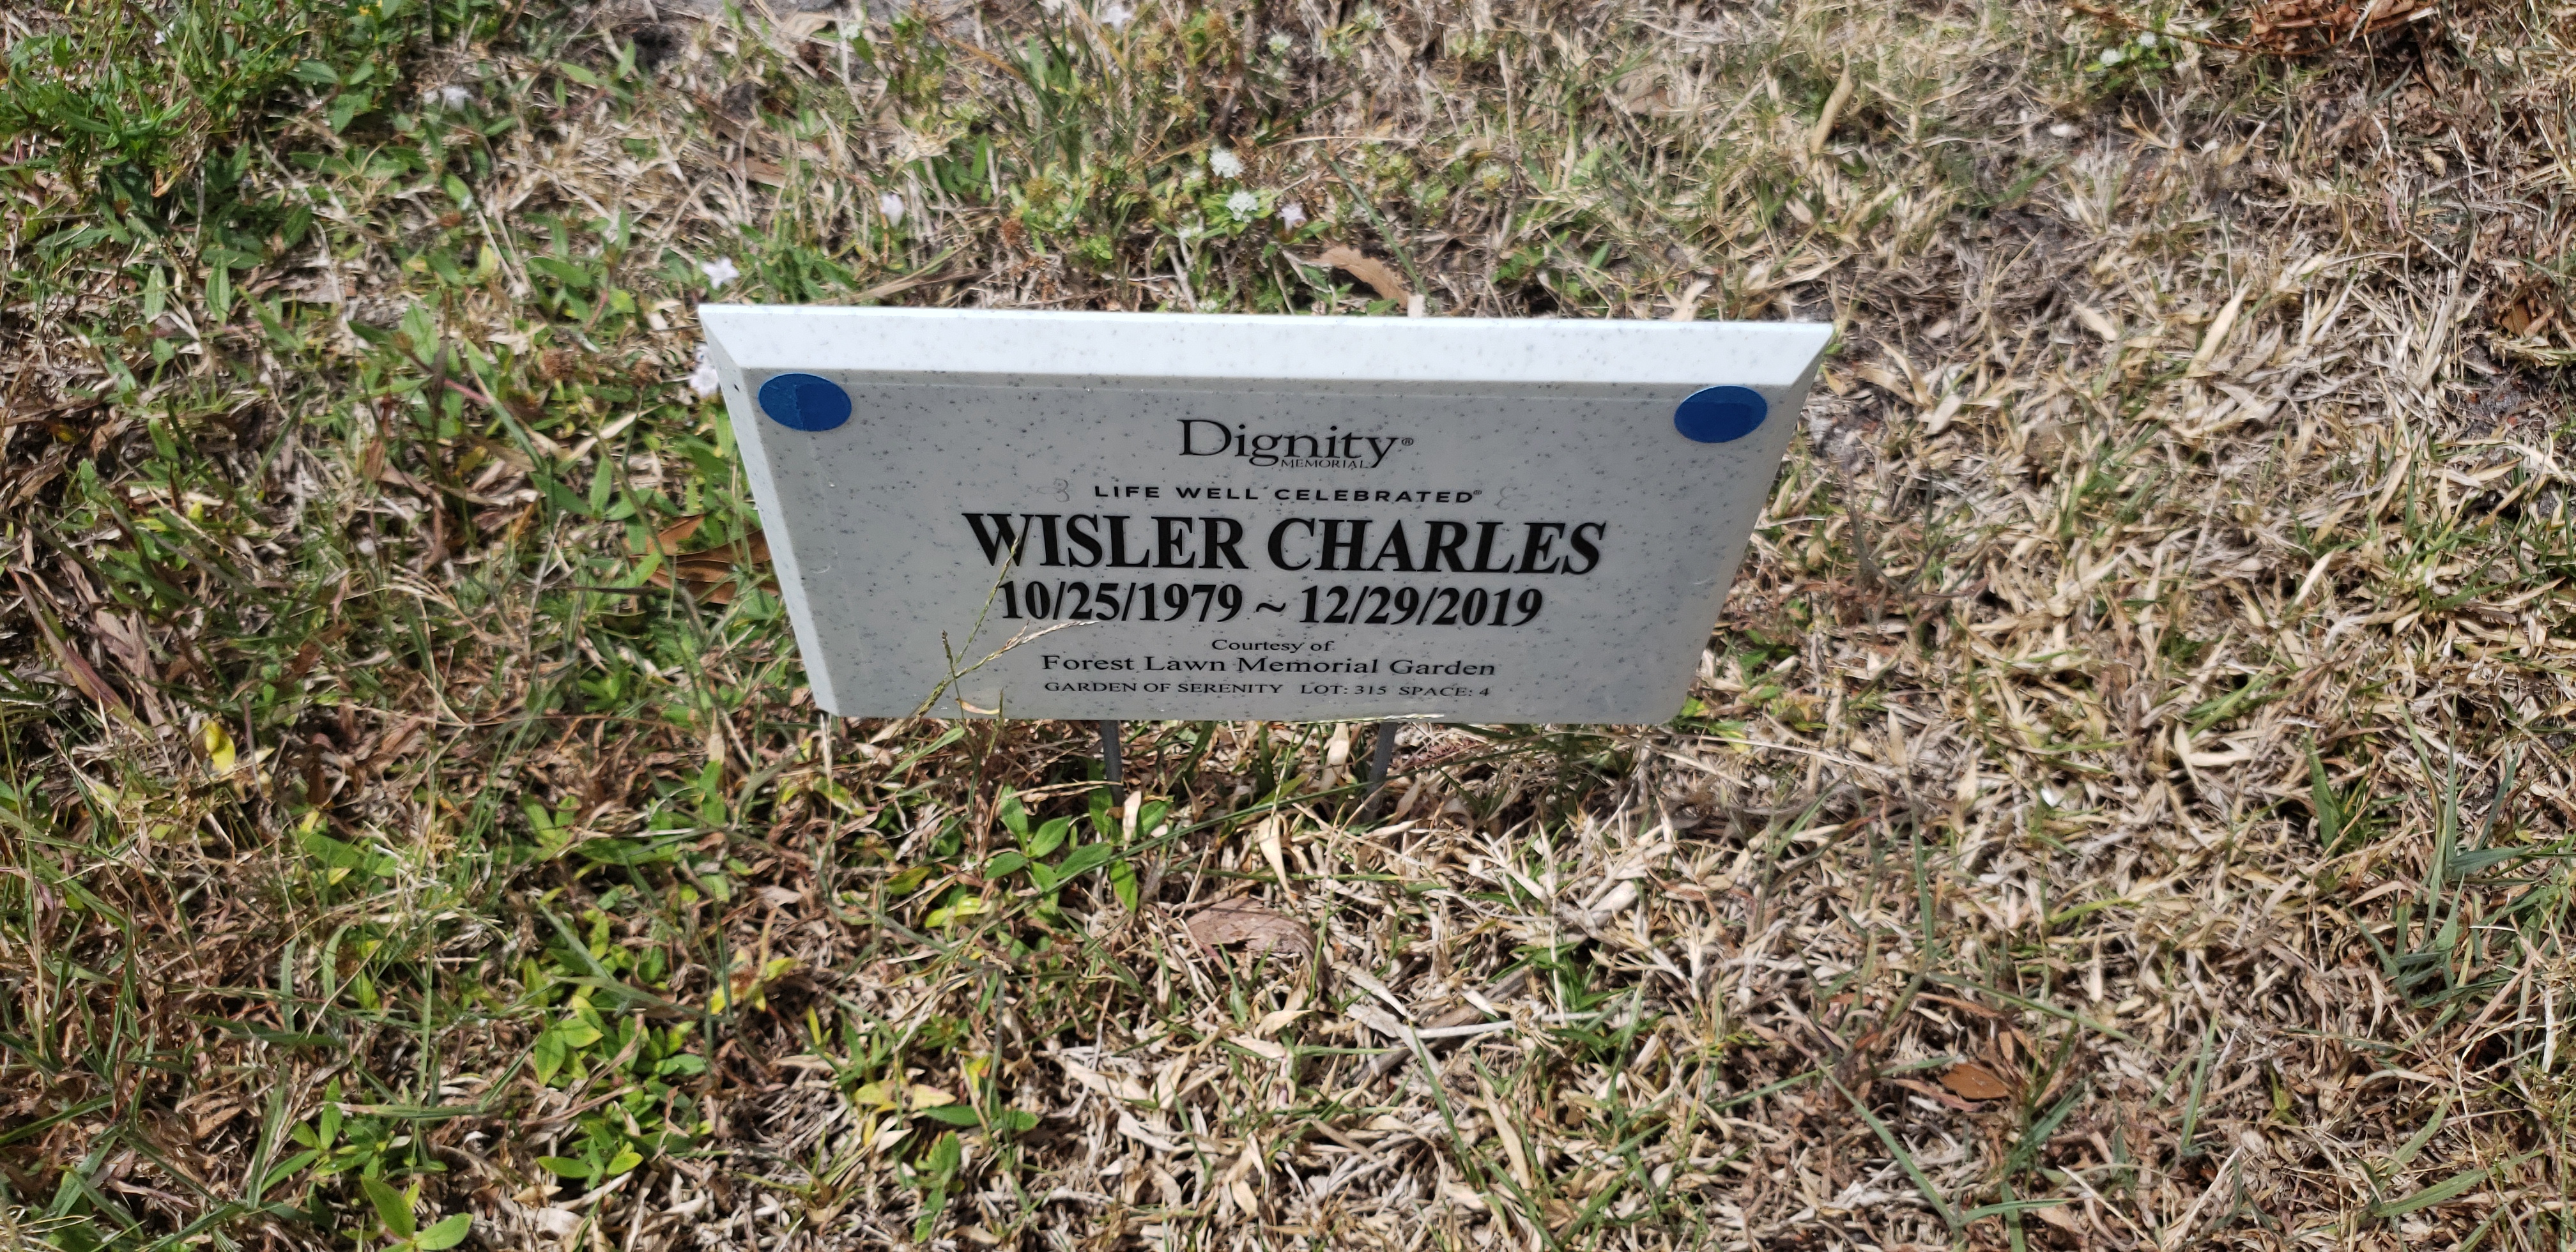 Wisler Charles